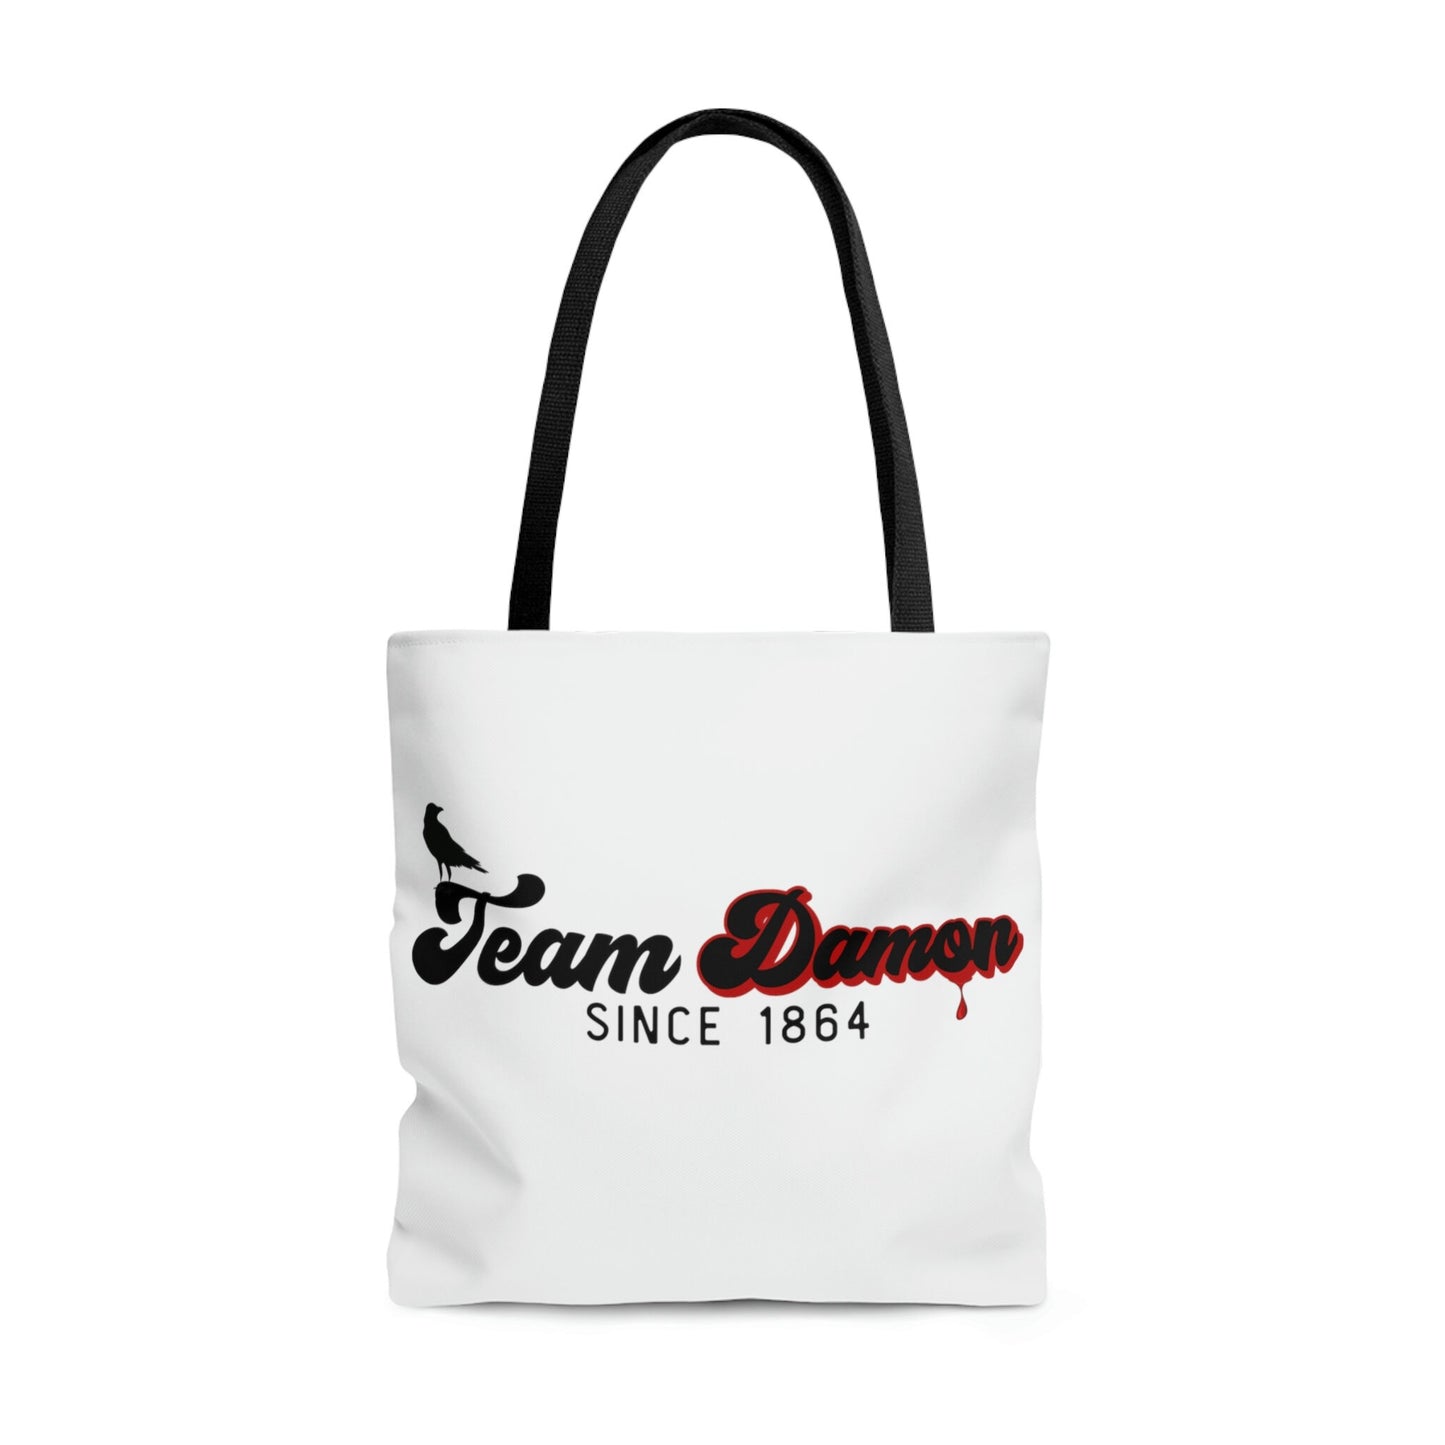 Tvd tote bagm, Damon Salvatore tote bag, Tvd fan gift, Tvd merch, Tvd shopping bag, Horror book bag, Horror merch, Salvatore brothers, Tvd